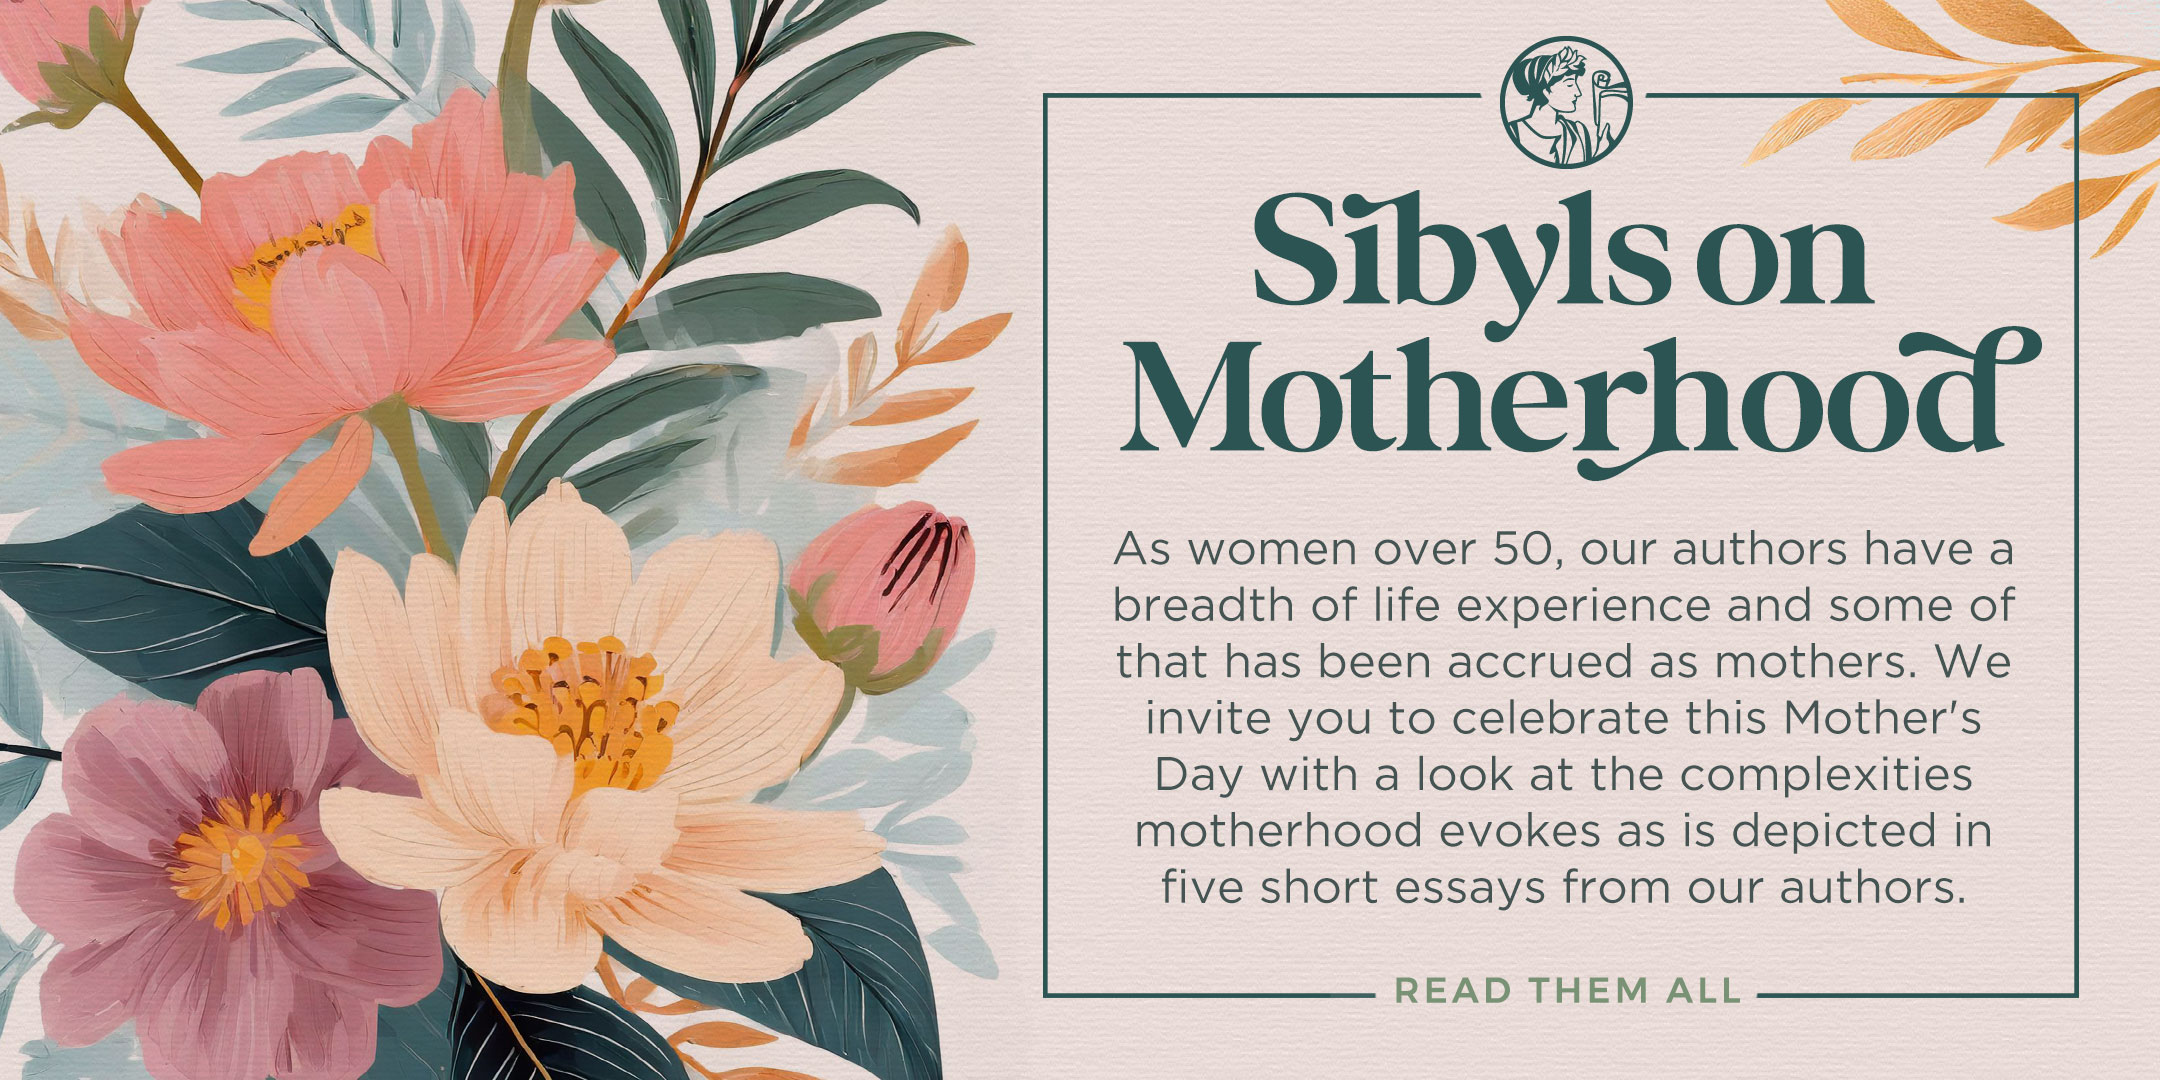 Sibyl's on Motherhood